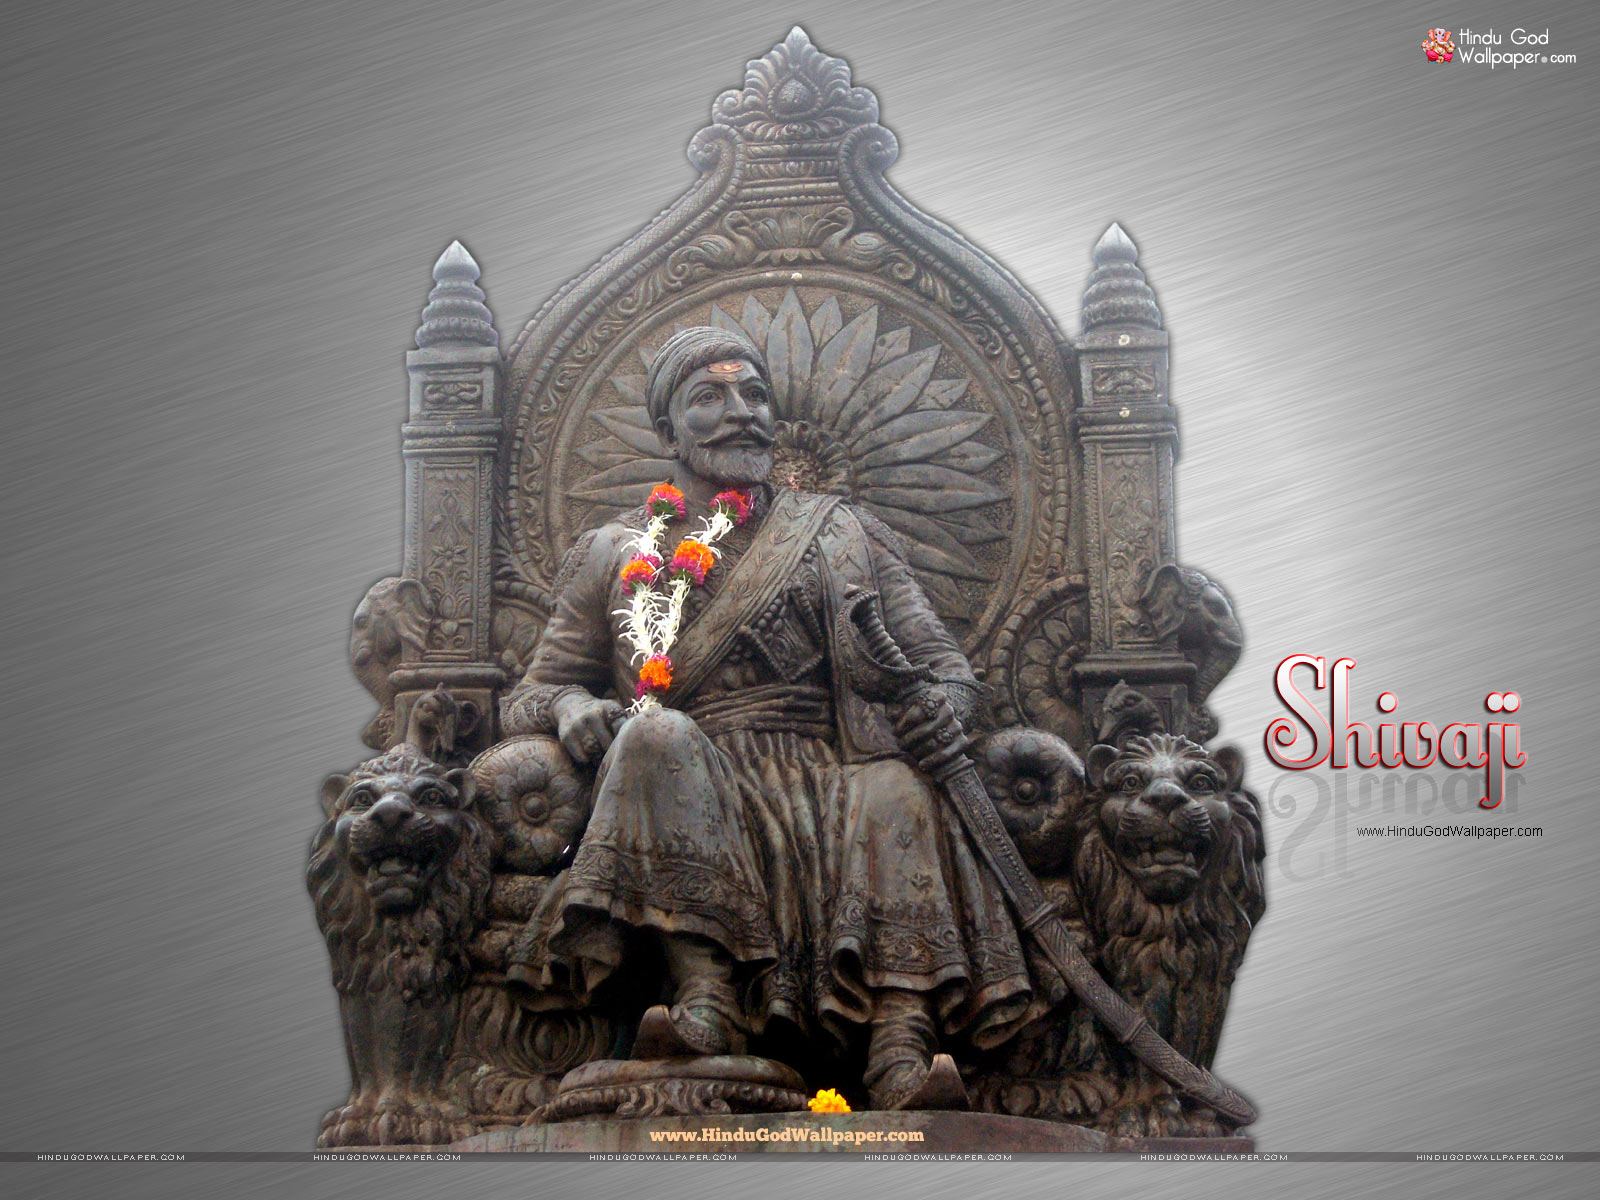 Shivaji Maharaj HD